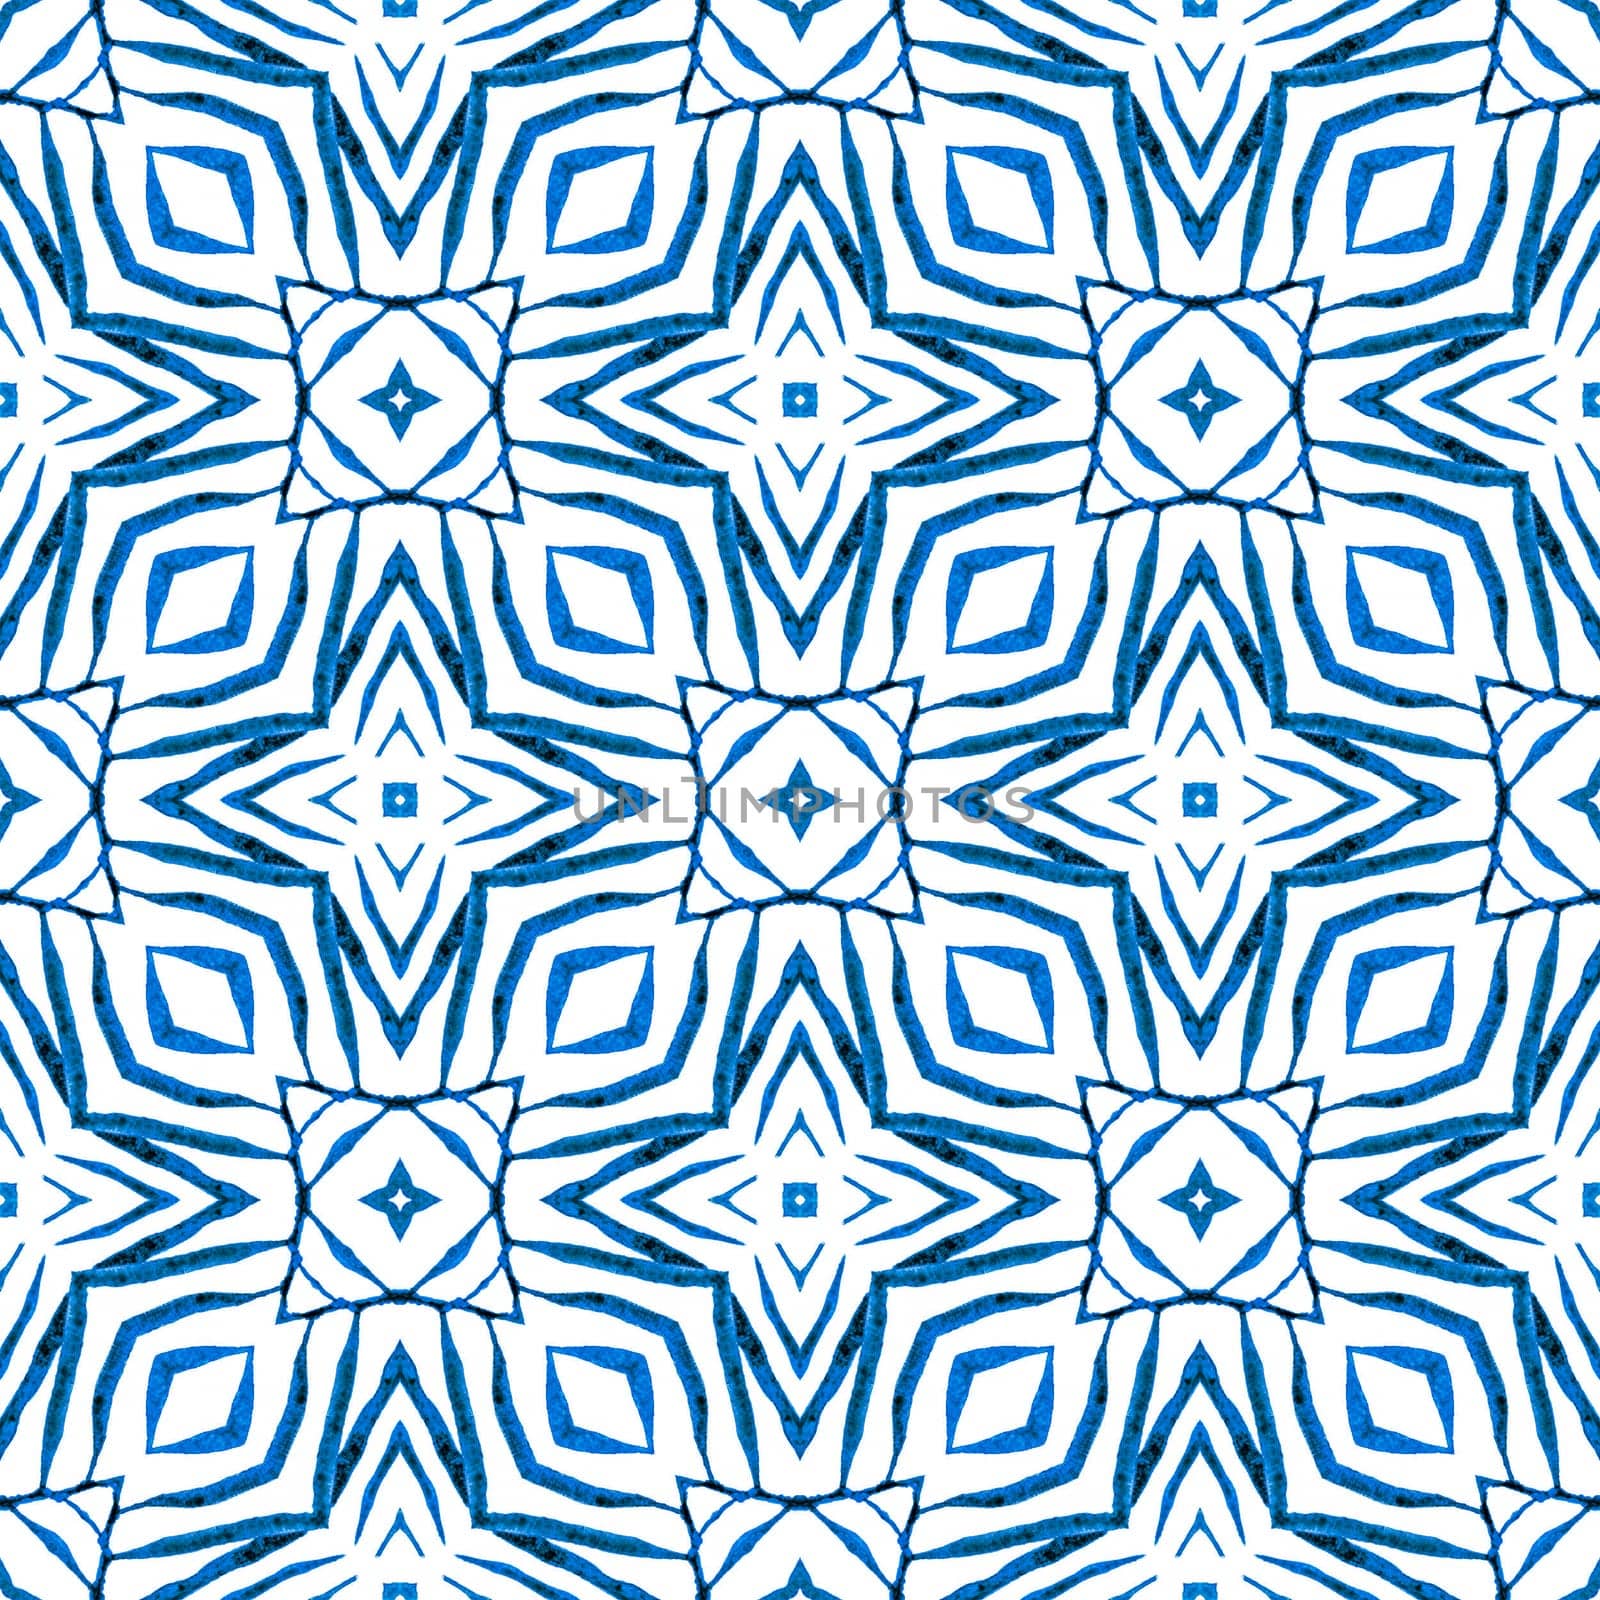 Textile ready enchanting print, swimwear fabric, wallpaper, wrapping. Blue fascinating boho chic summer design. Arabesque hand drawn design. Oriental arabesque hand drawn border.